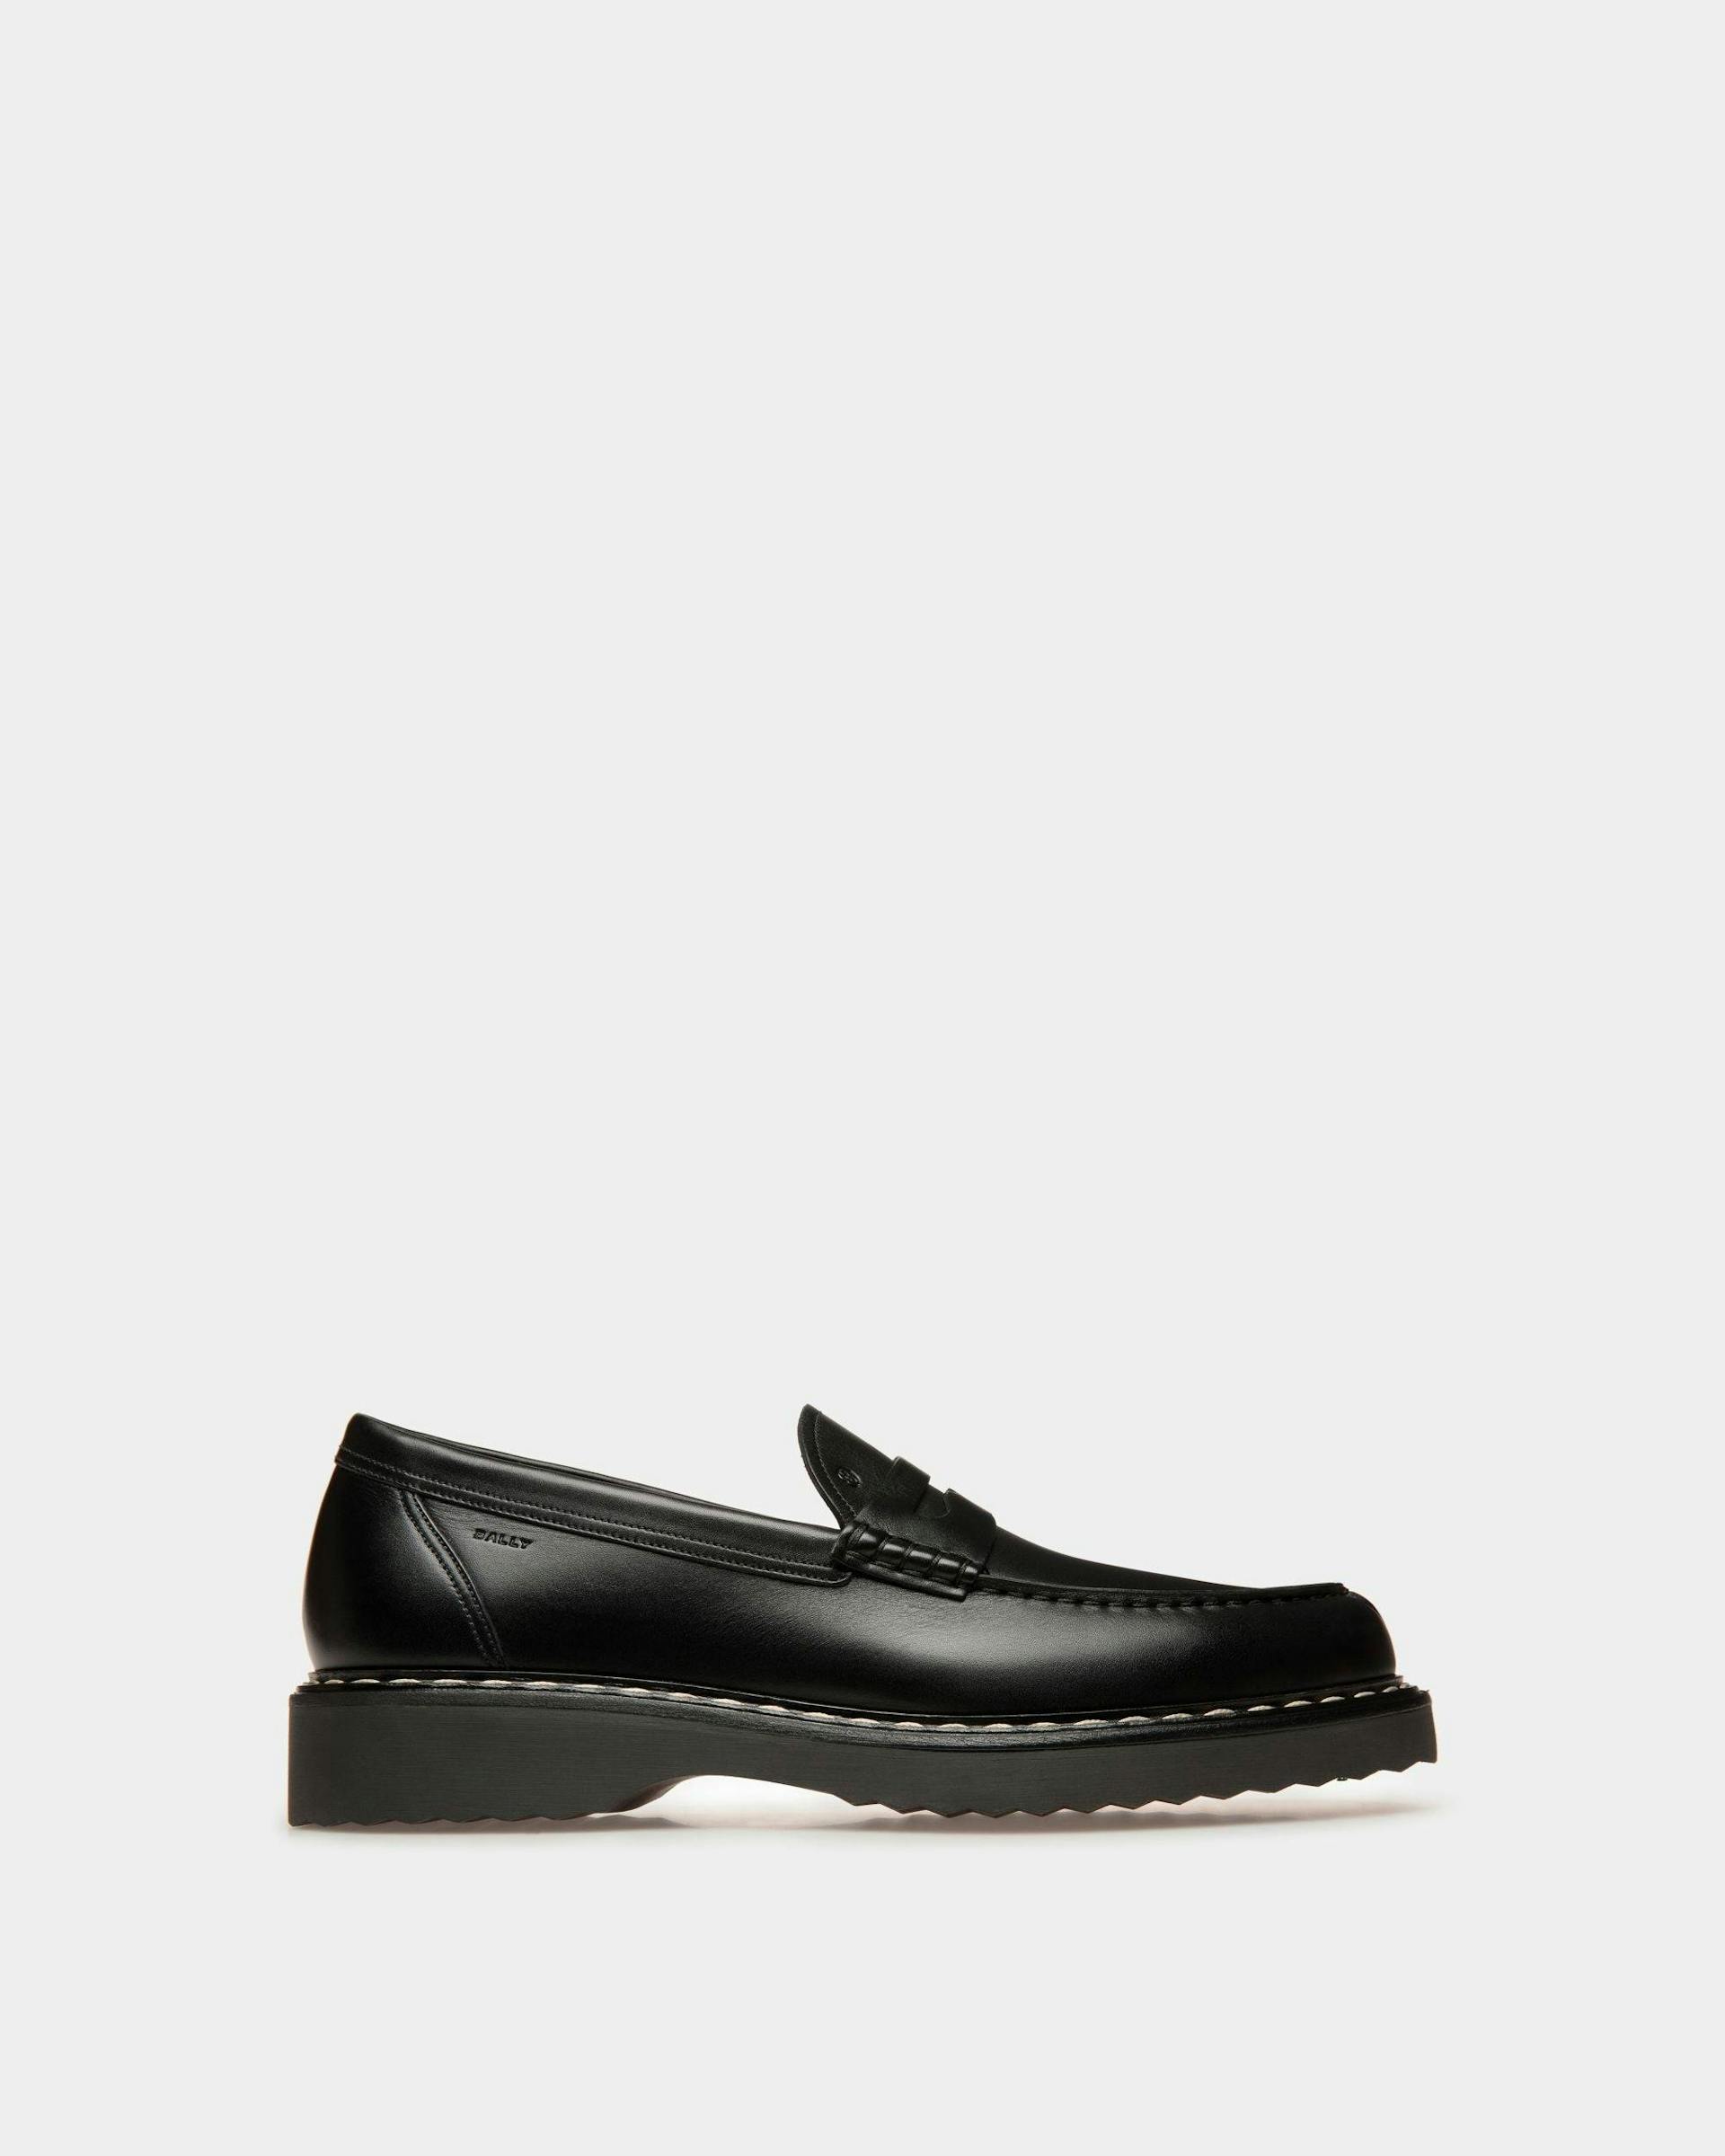 Necko | Men's Loafers | Black Leather | Bally